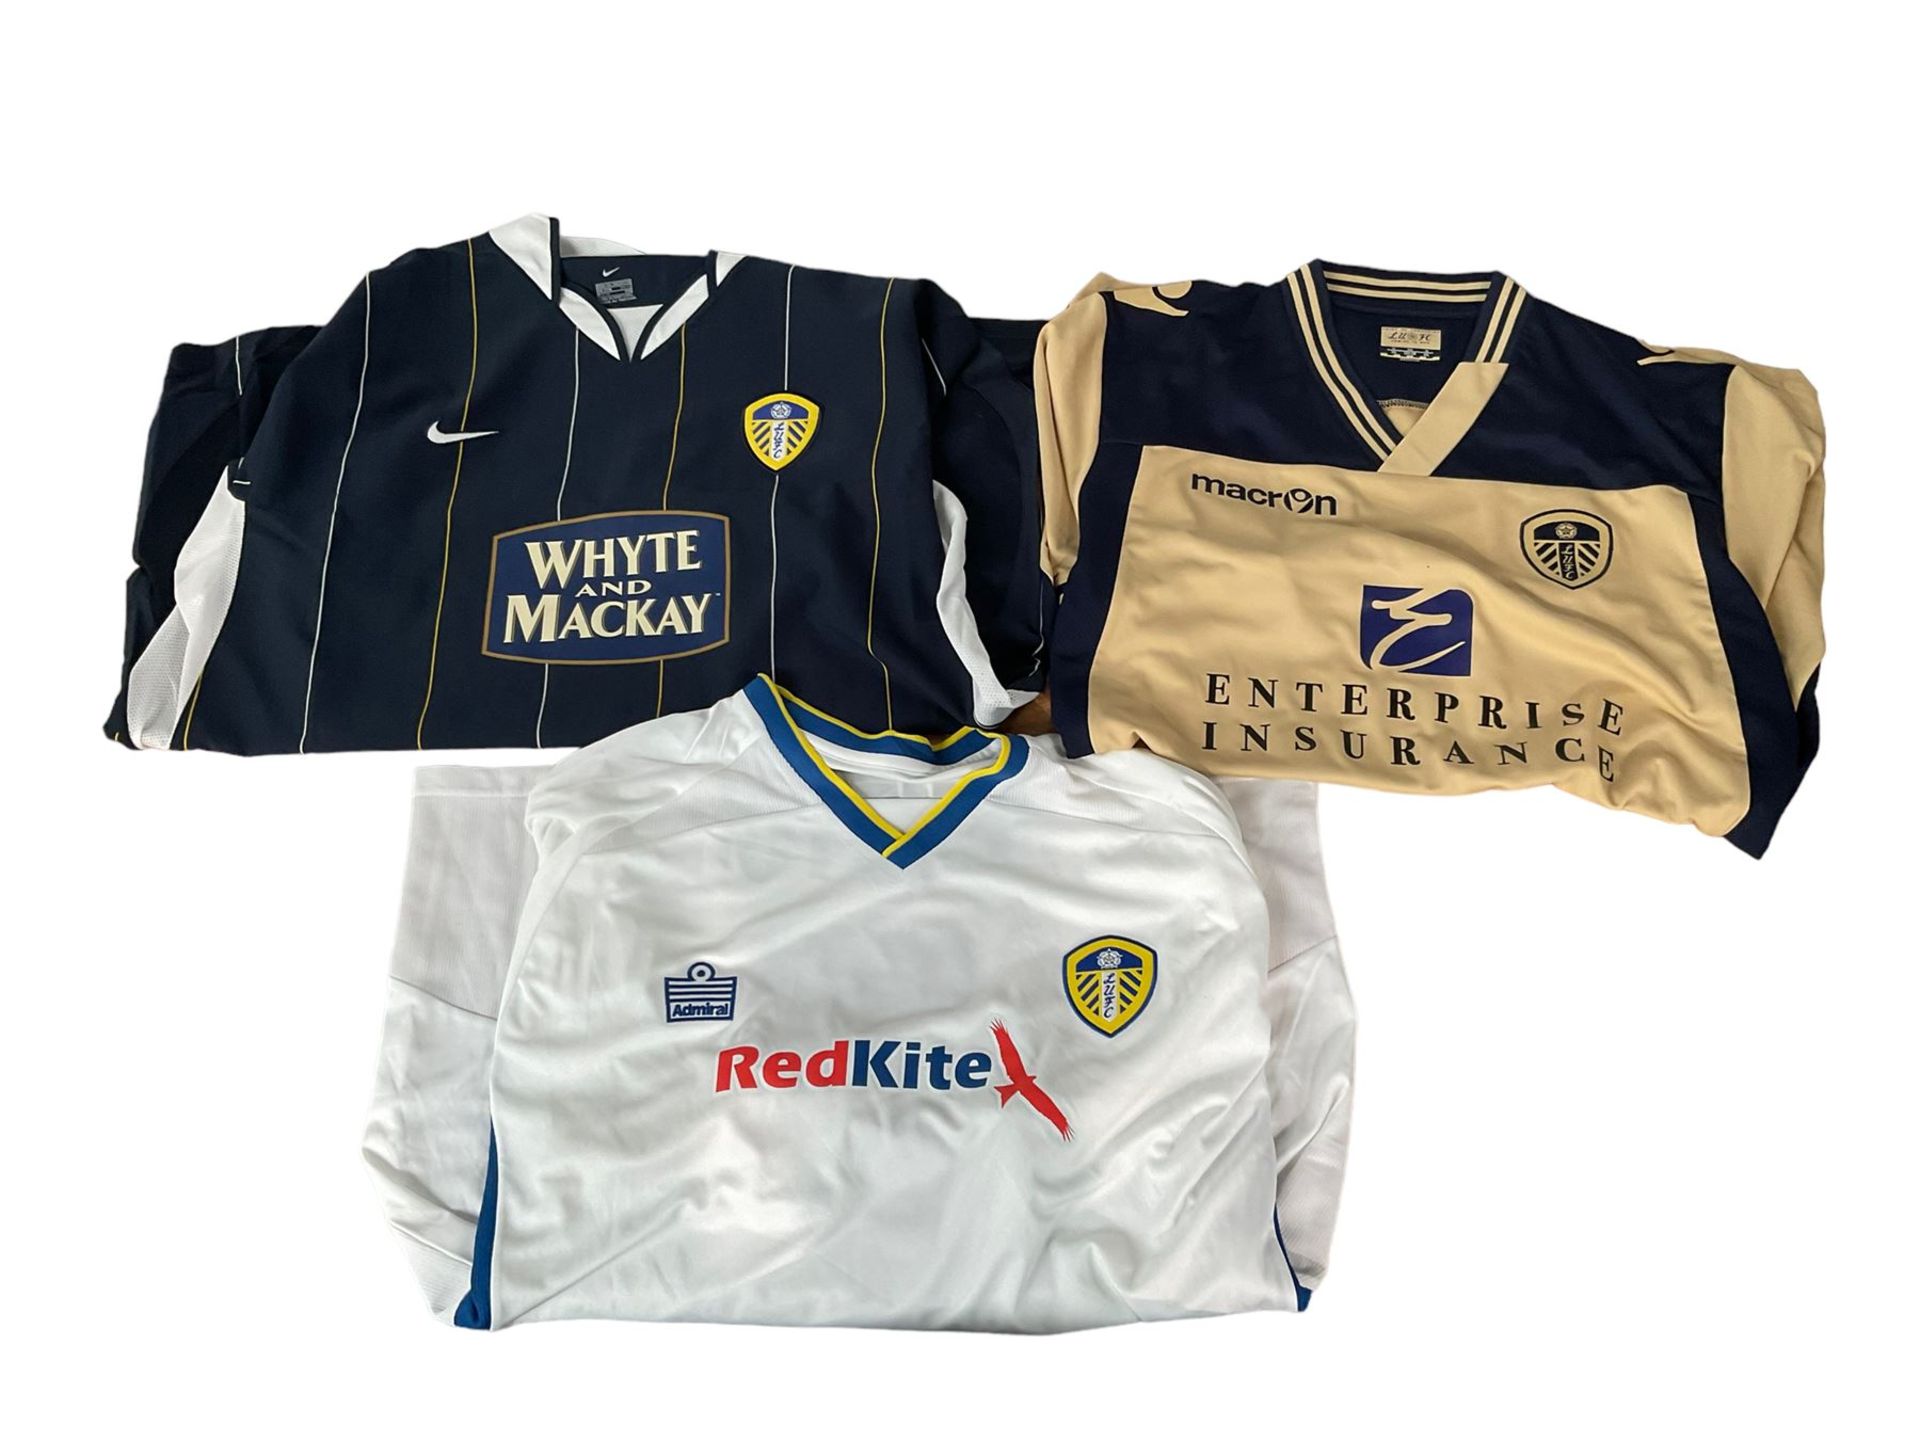 Leeds United football club - twenty-three replica shirts including 1970s 'Arkwright' - Image 7 of 7